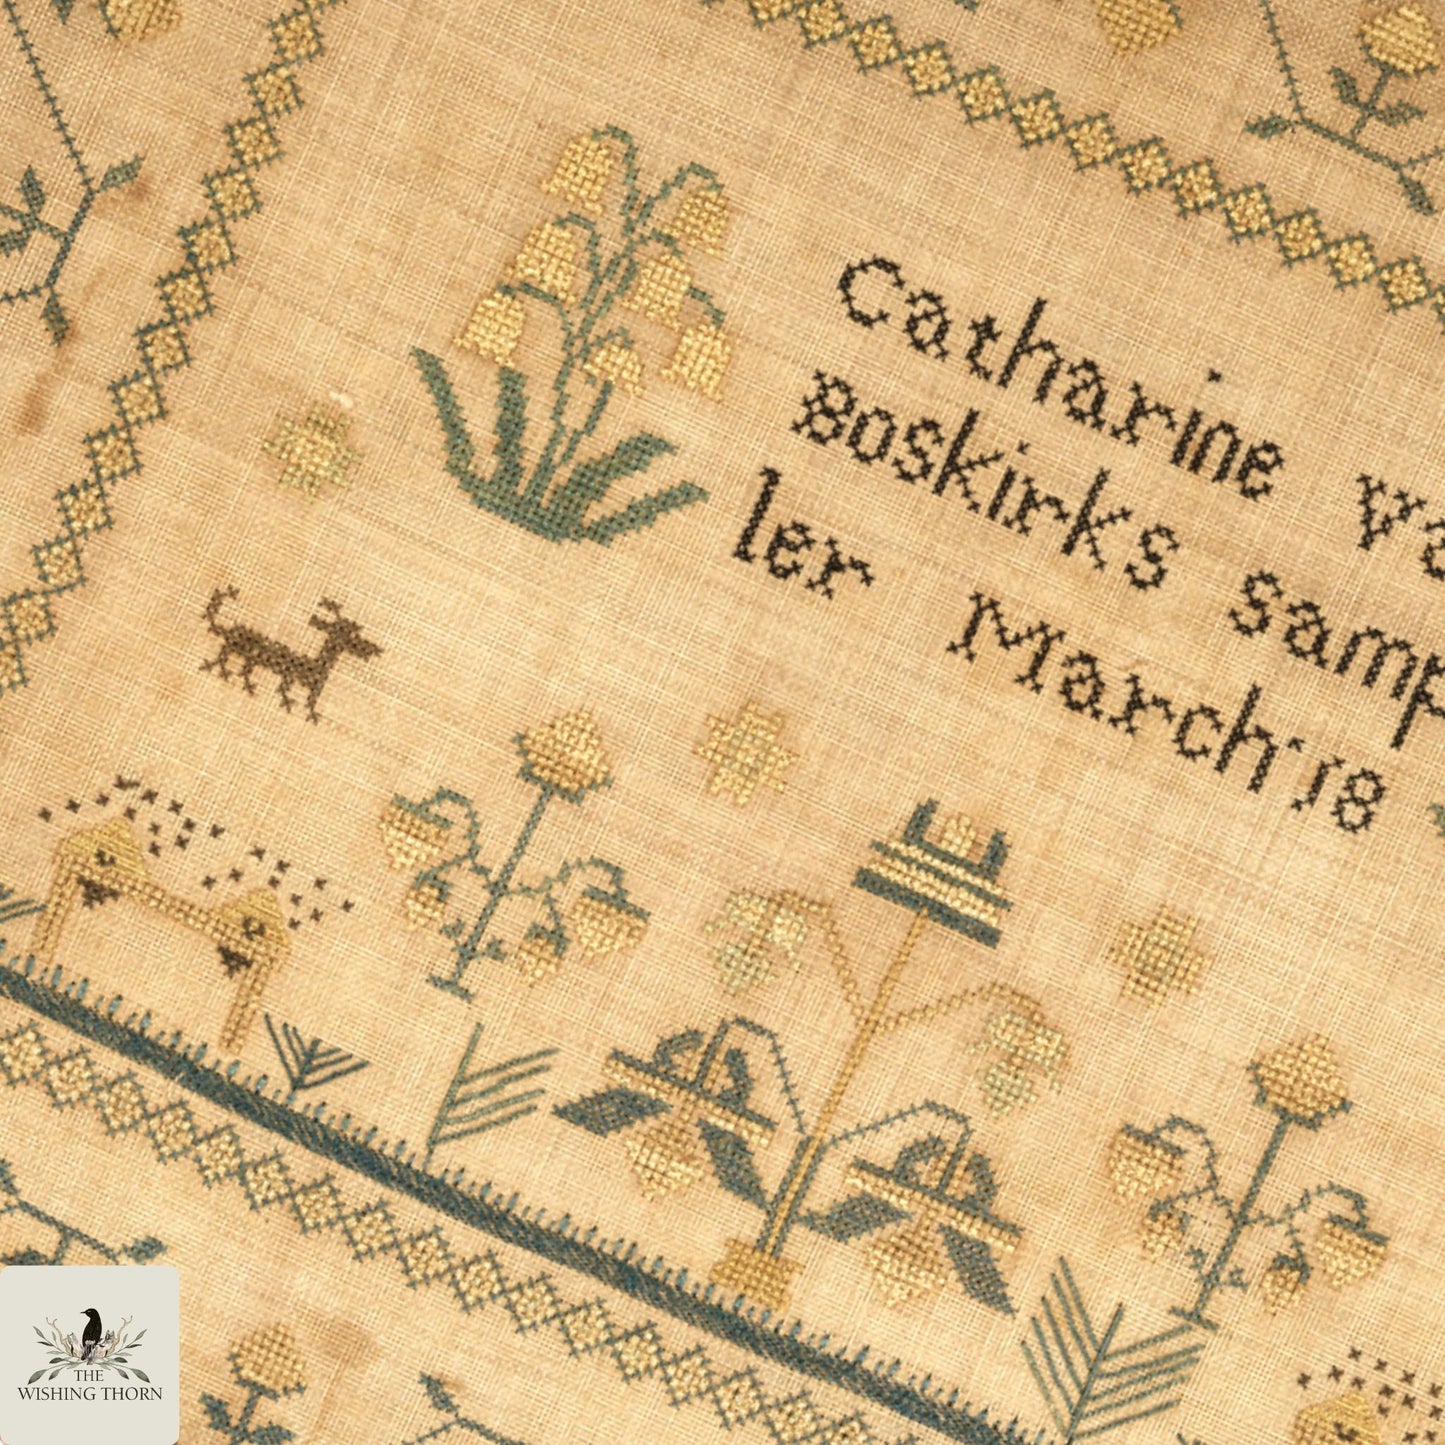 Catharine Van Boskirks Pattern by The Wishing Thorn